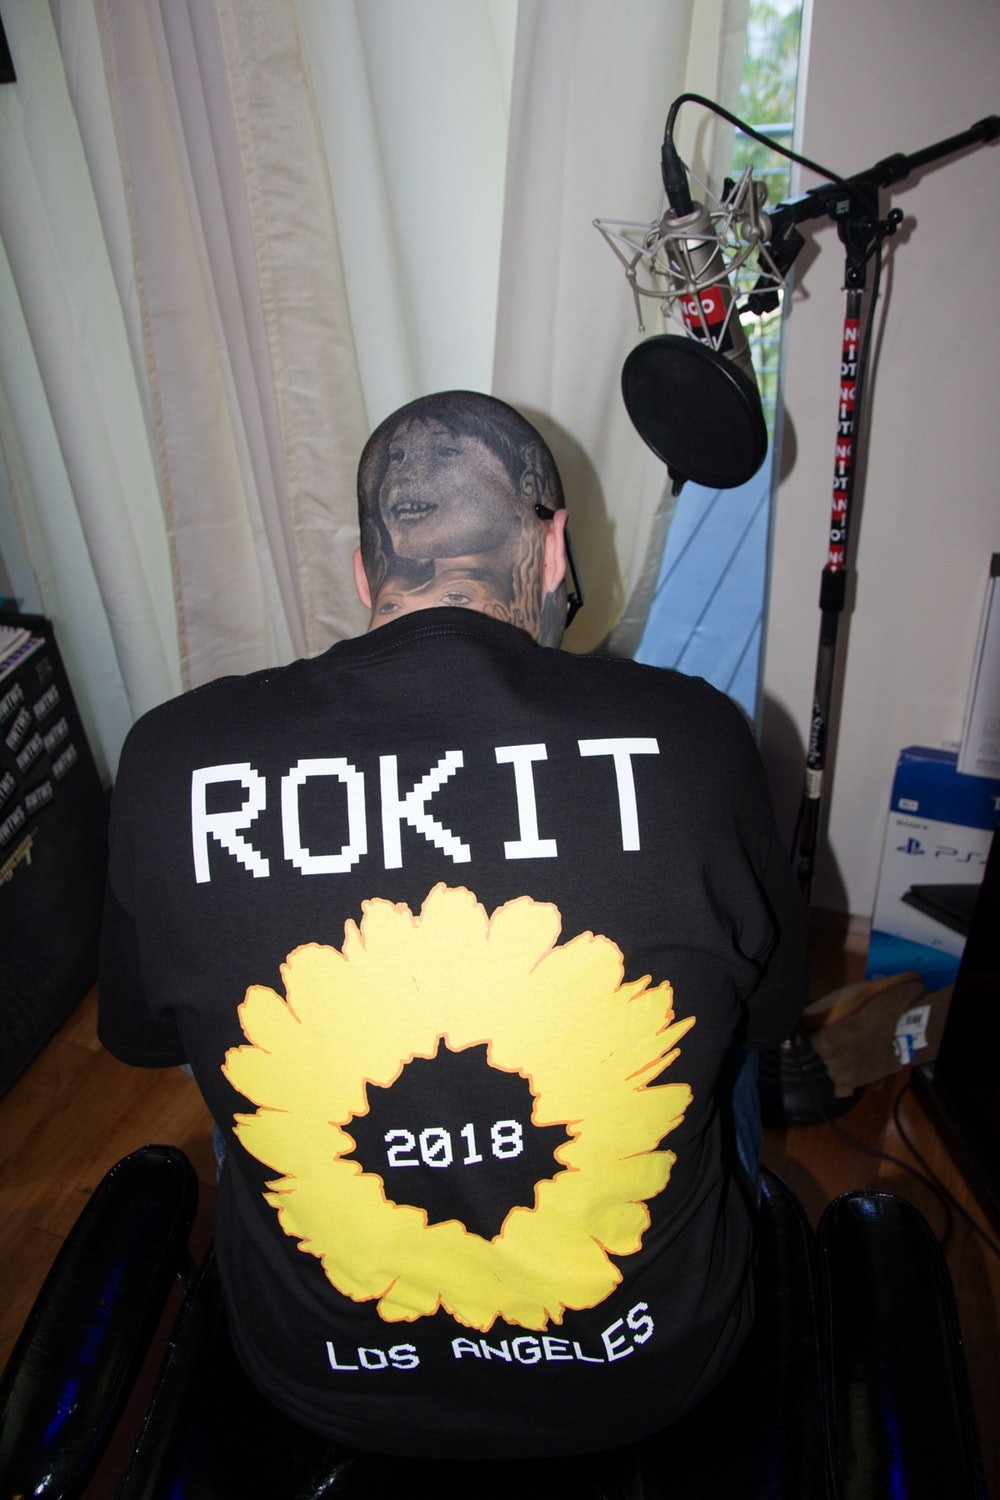 ROKIT x PLEASURES 2018 春夏聯名系列 Lookbook